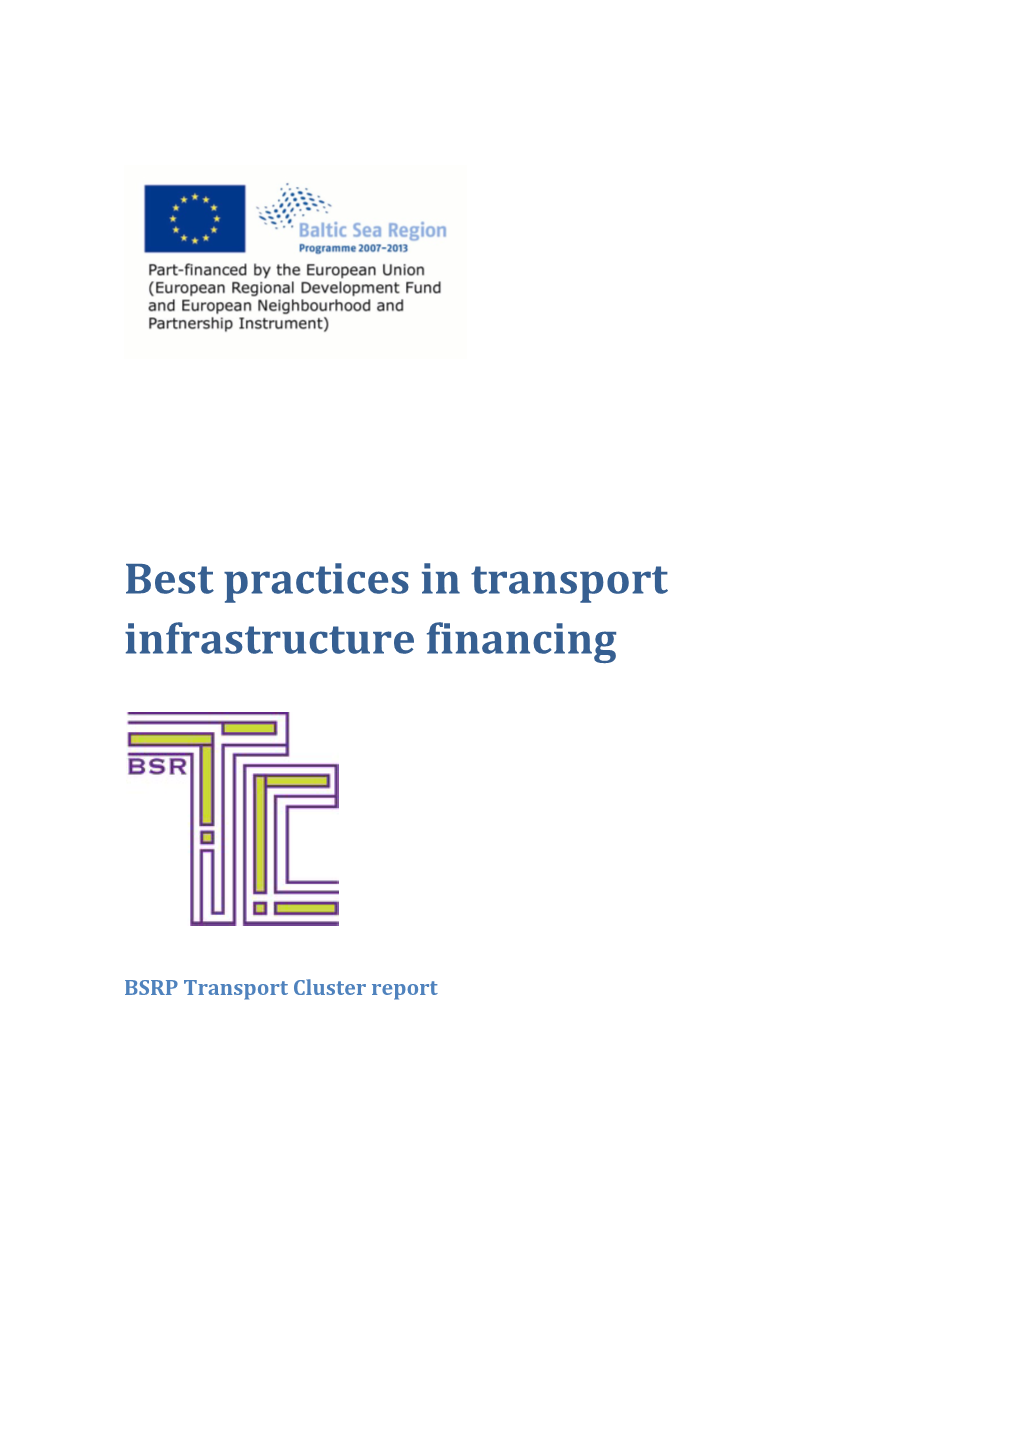 Best Practices in Transport Infrastructure Financing